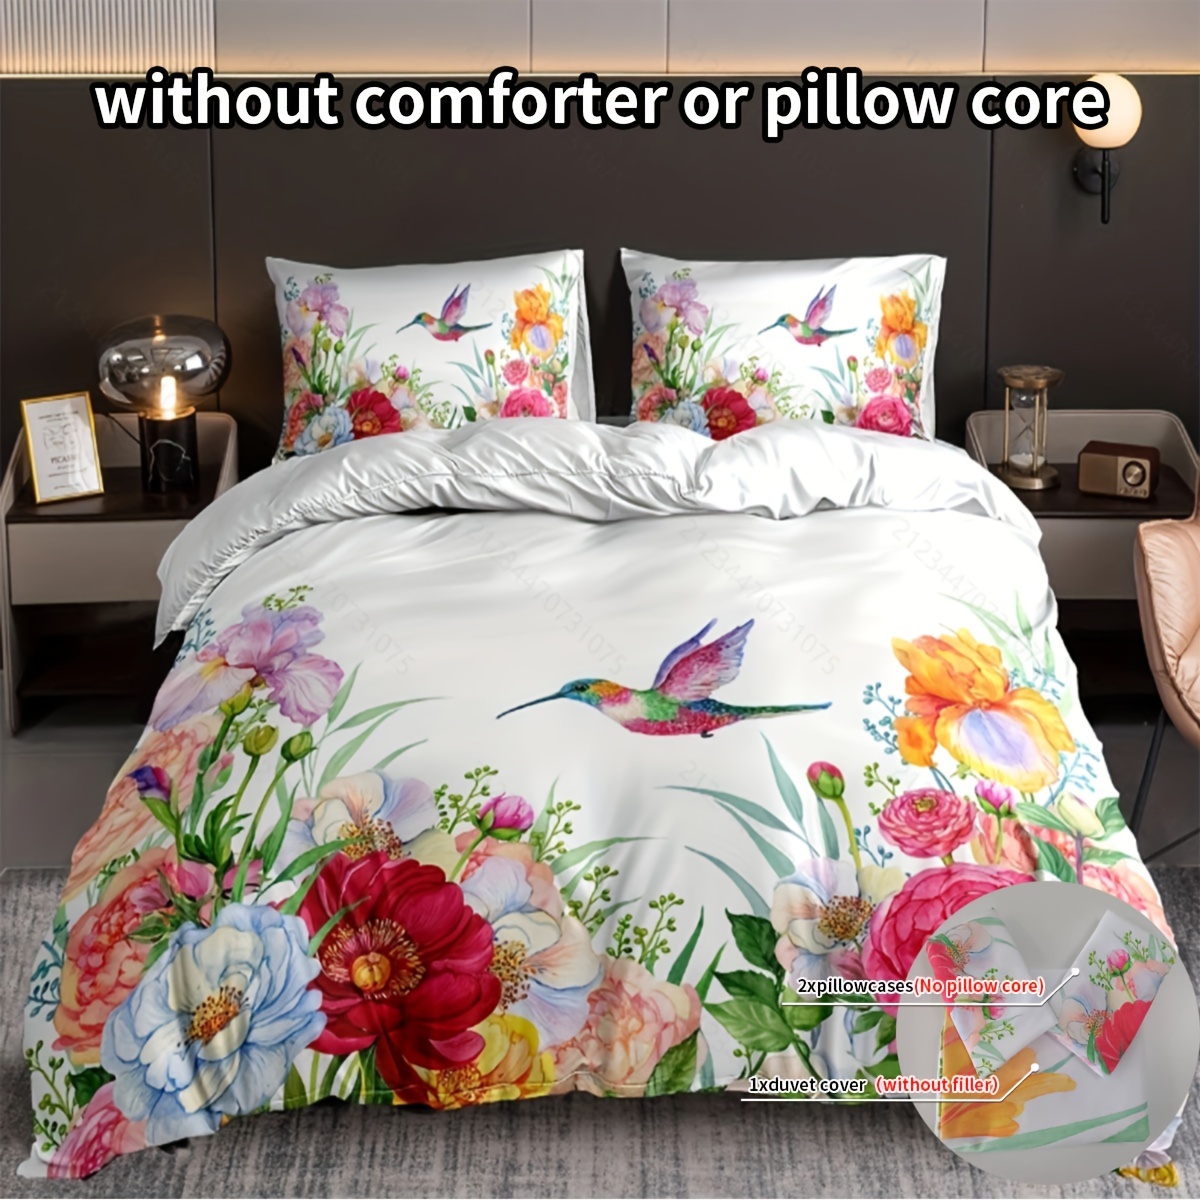 

3pcs Duvet Cover Set, Floral Bird Print Bedding Set, Soft Comfortable Breathable Duvet Cover, For Bedroom, Guest Room (1*duvet Cover + 2*pillowcase, Without Core)